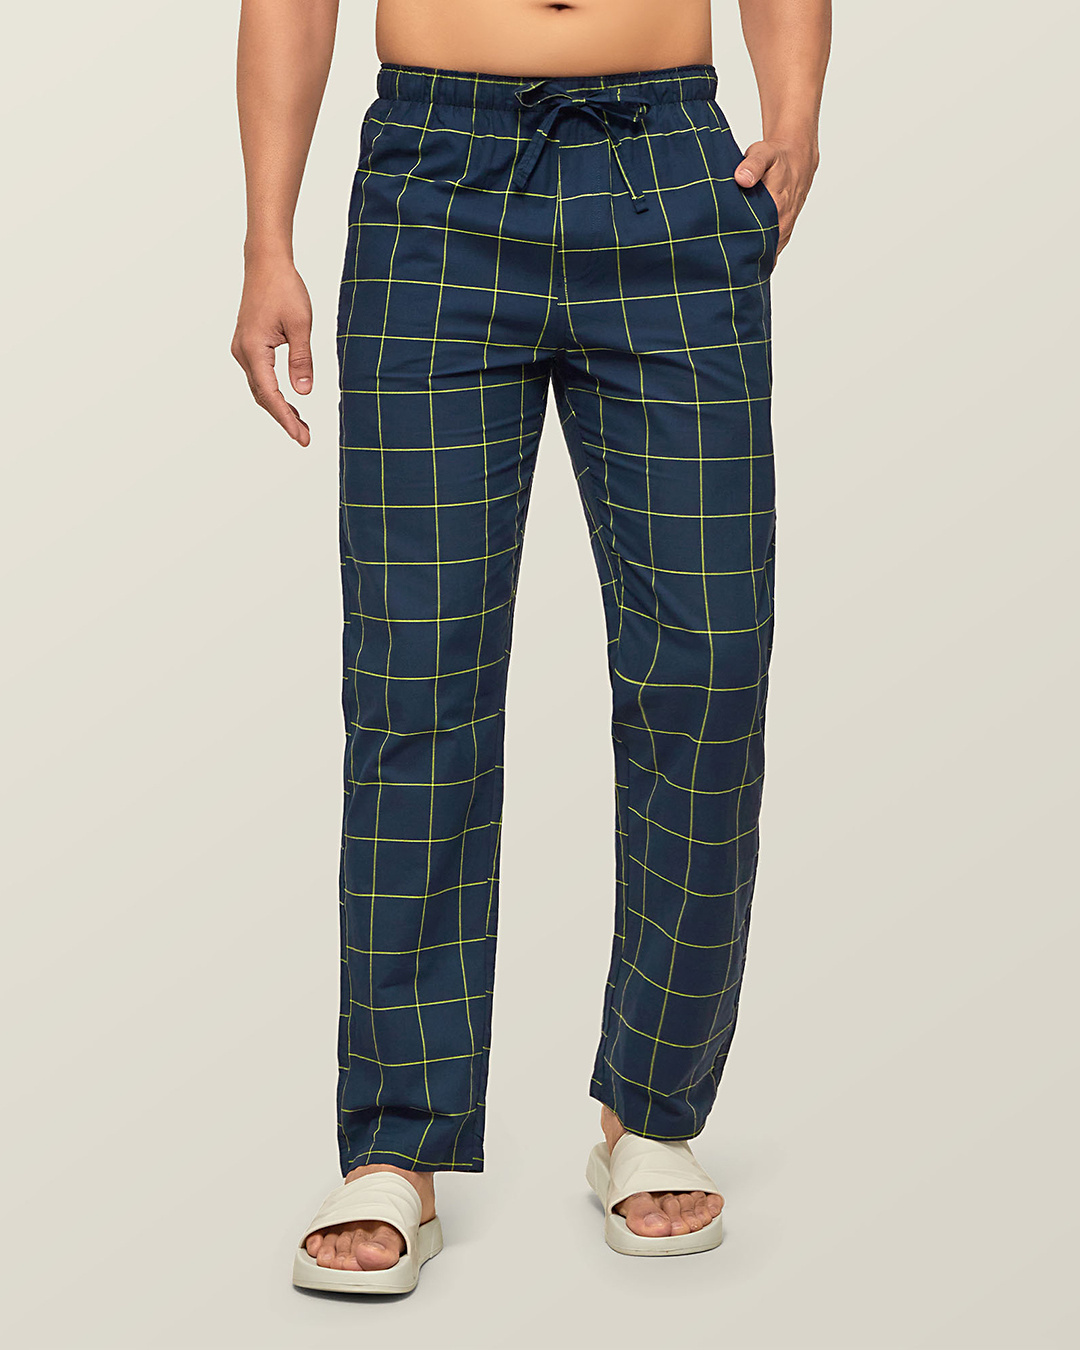 Shop Pack of 2 Men's Blue & Grey Super Combed Checkered Pyjamas-Back